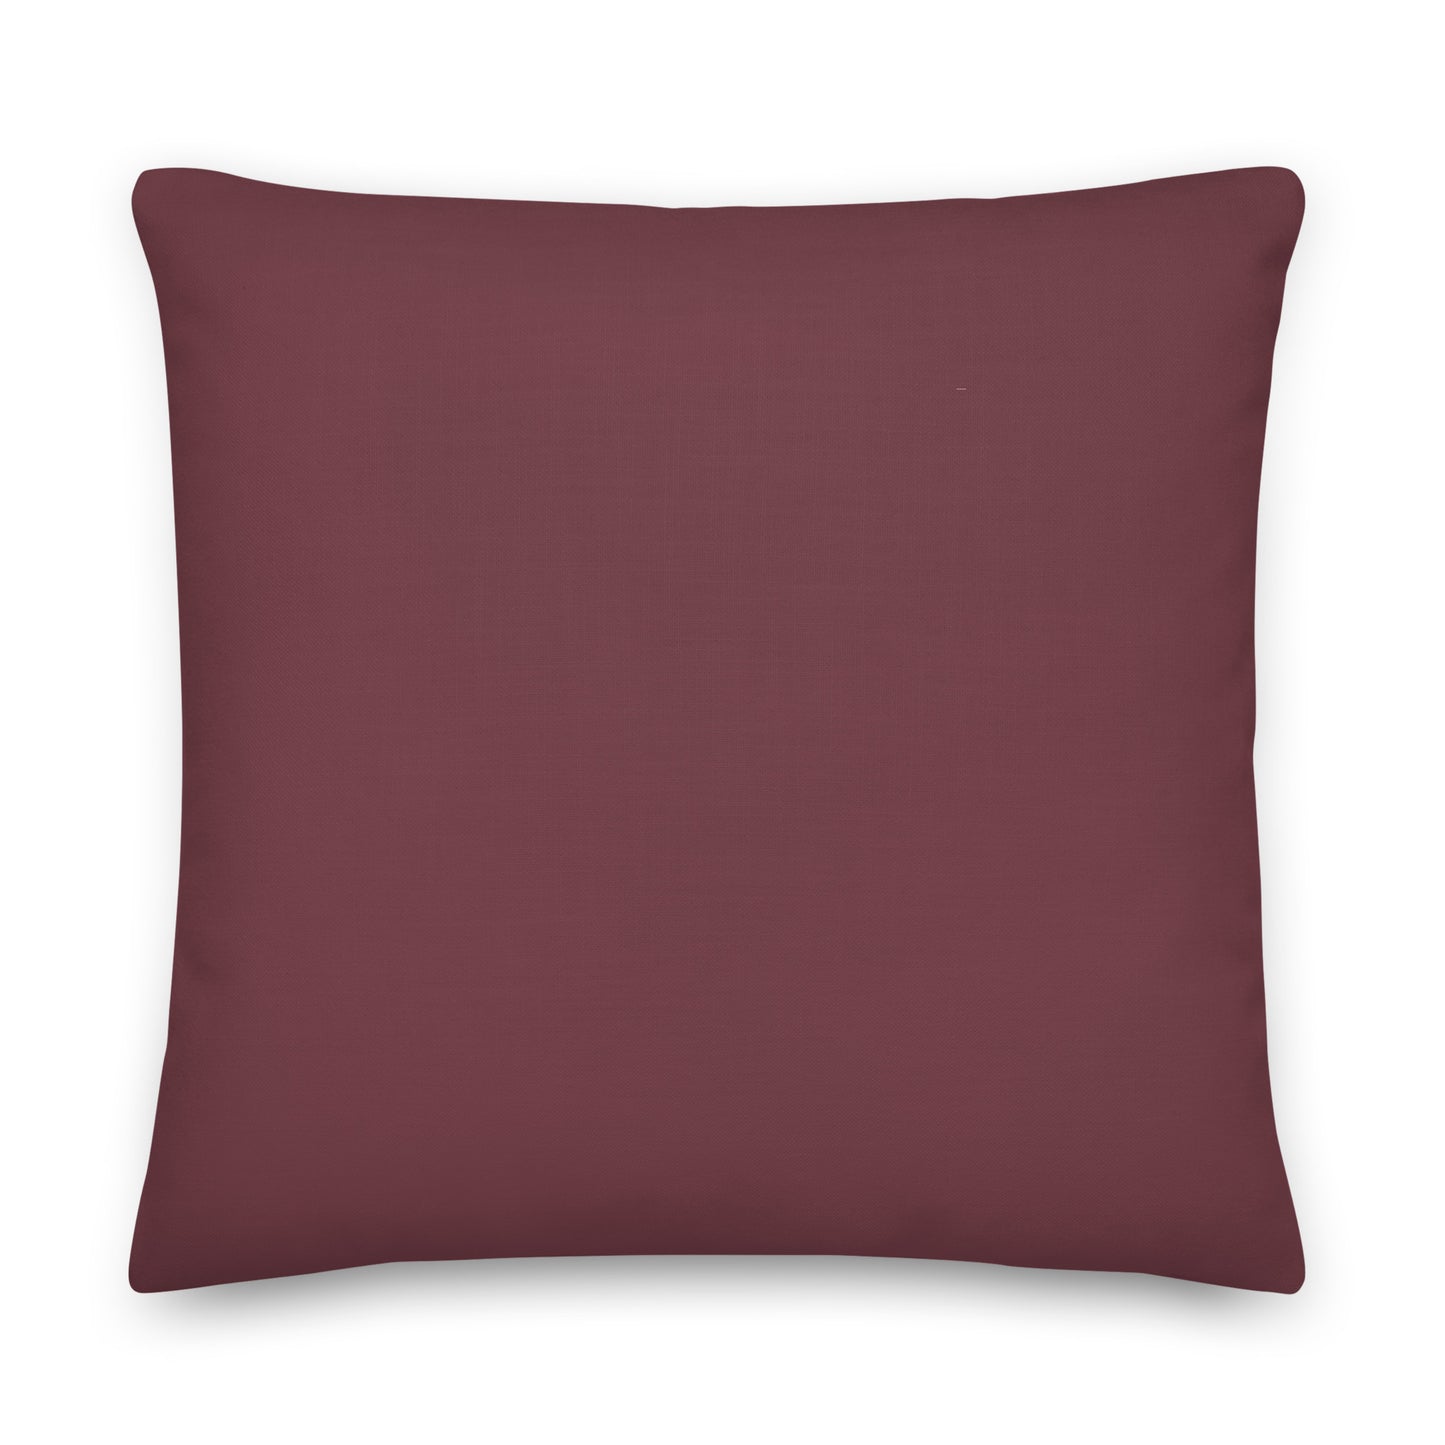 Moon Star Circle Purple Peace Premium Throw Pillow